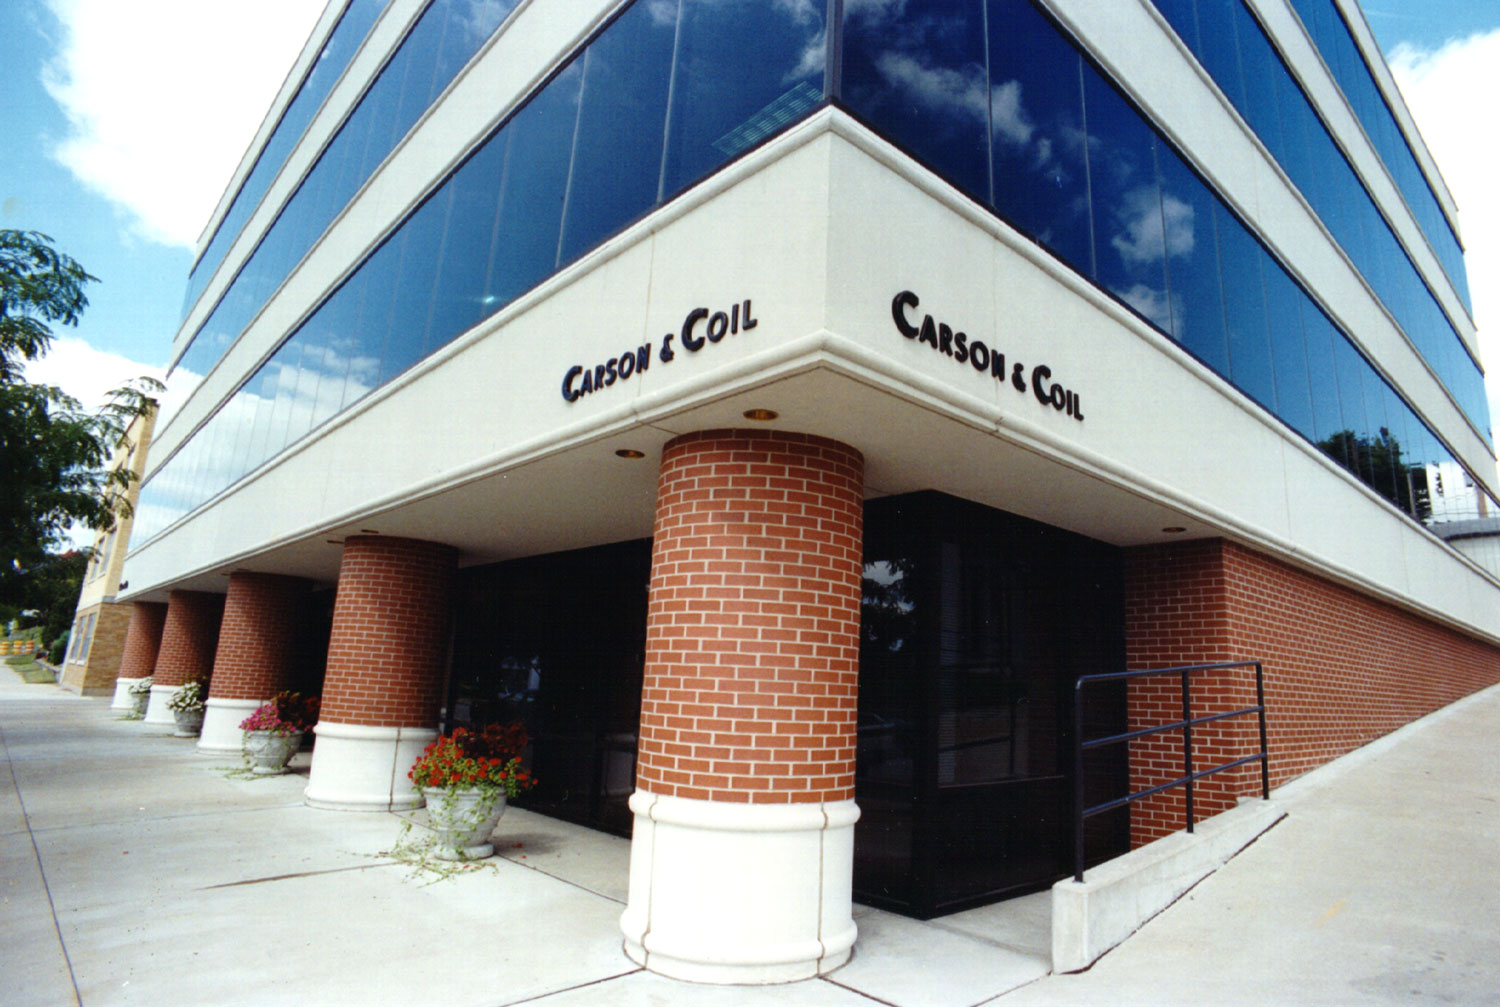 Carson & Coil